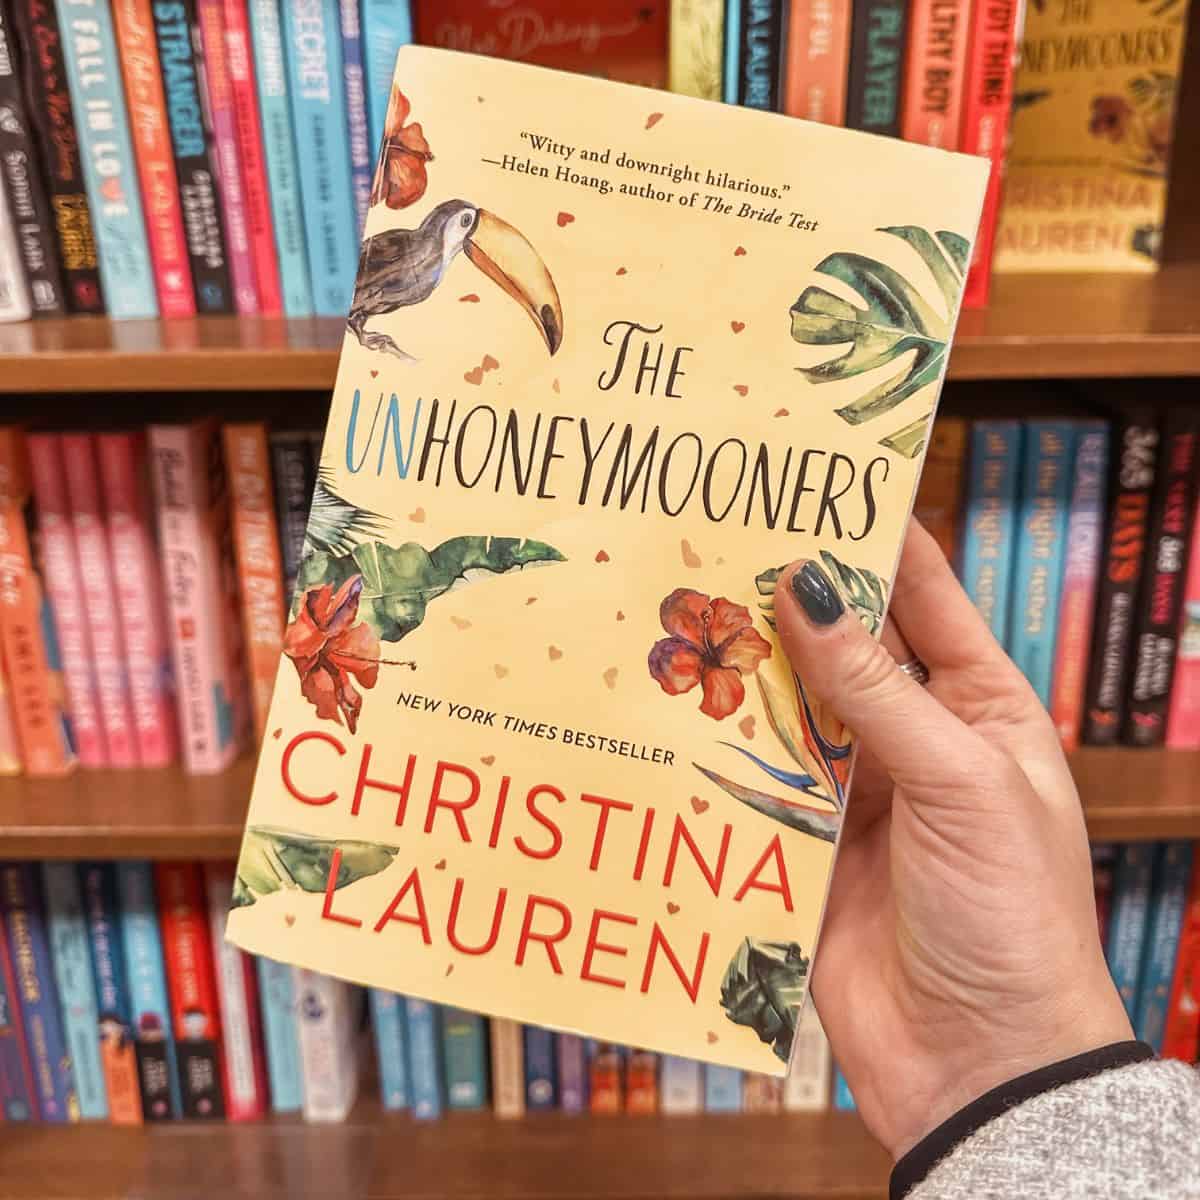 the unhoneymooners by christina lauren in front on bookshelves.